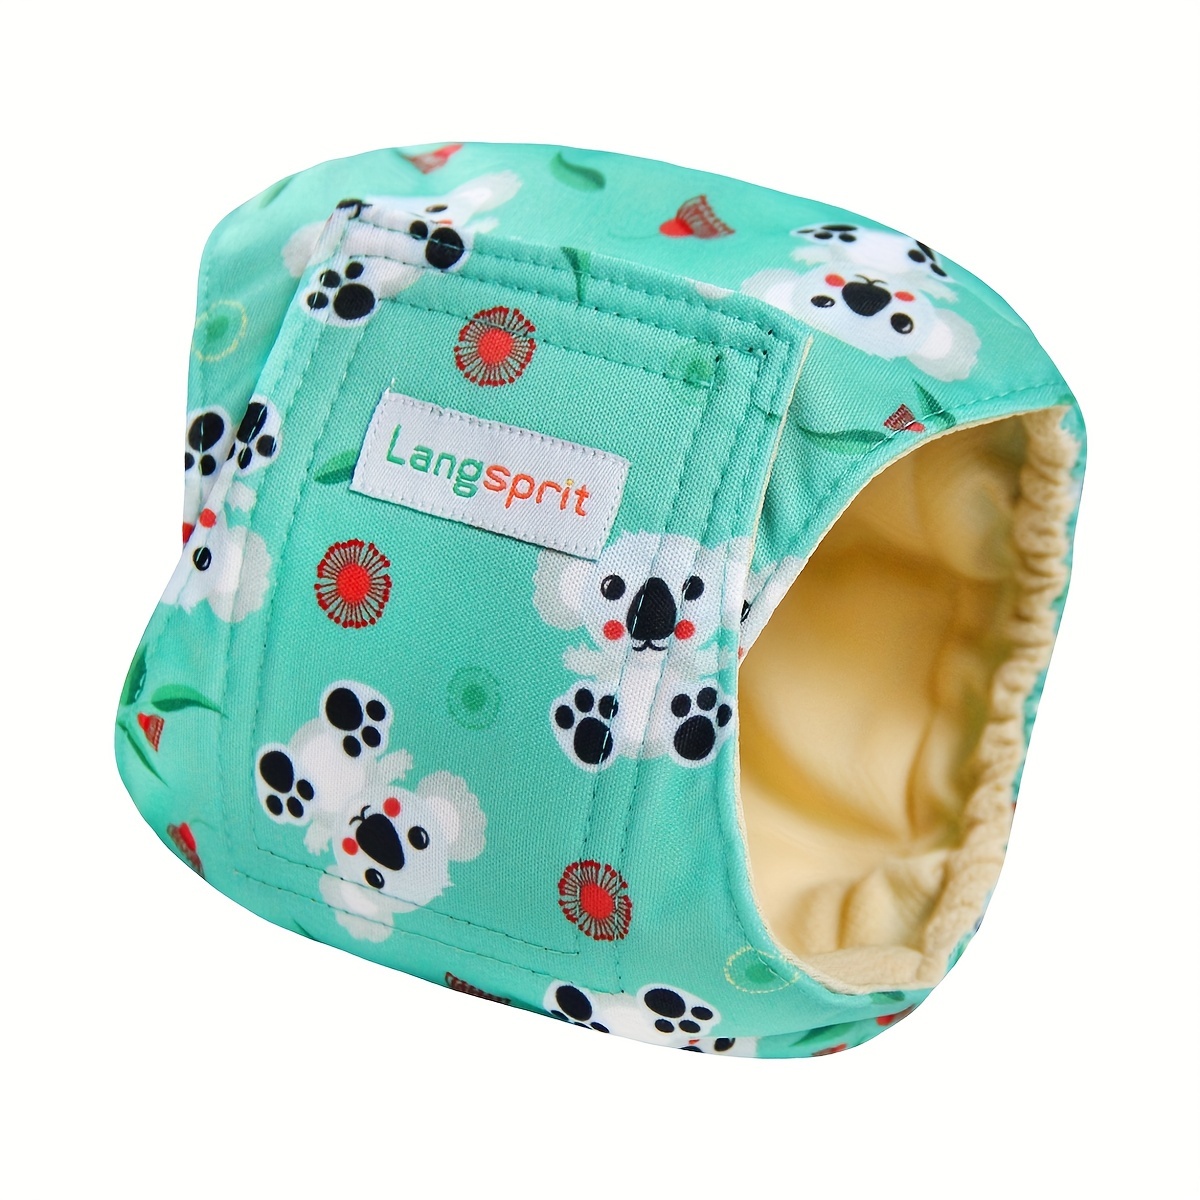 Langsprit Washable Female Dog Diapers (3 Pack) - No Leak Reusable